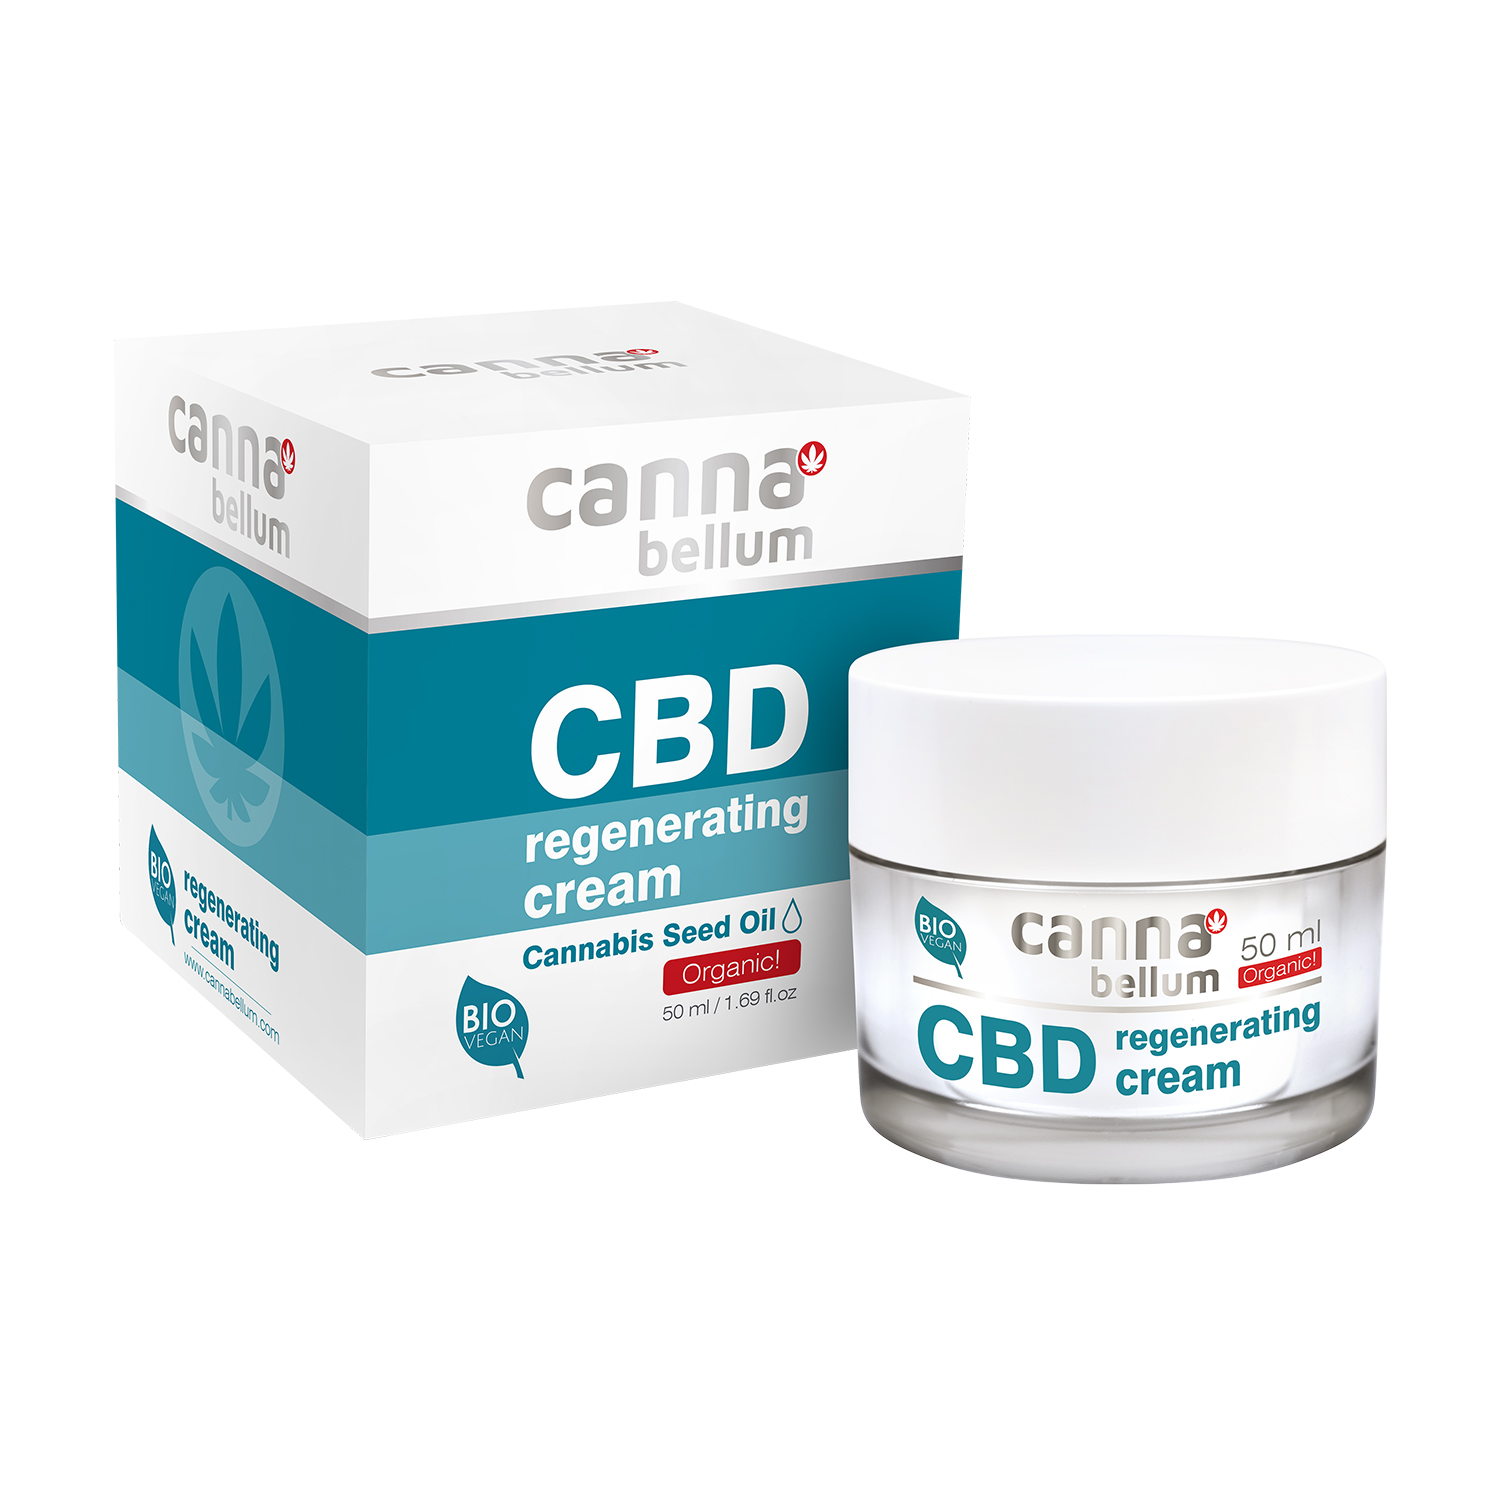 Cannabellum CBD regenerating cream 50ml P1253 komplet WEB 30